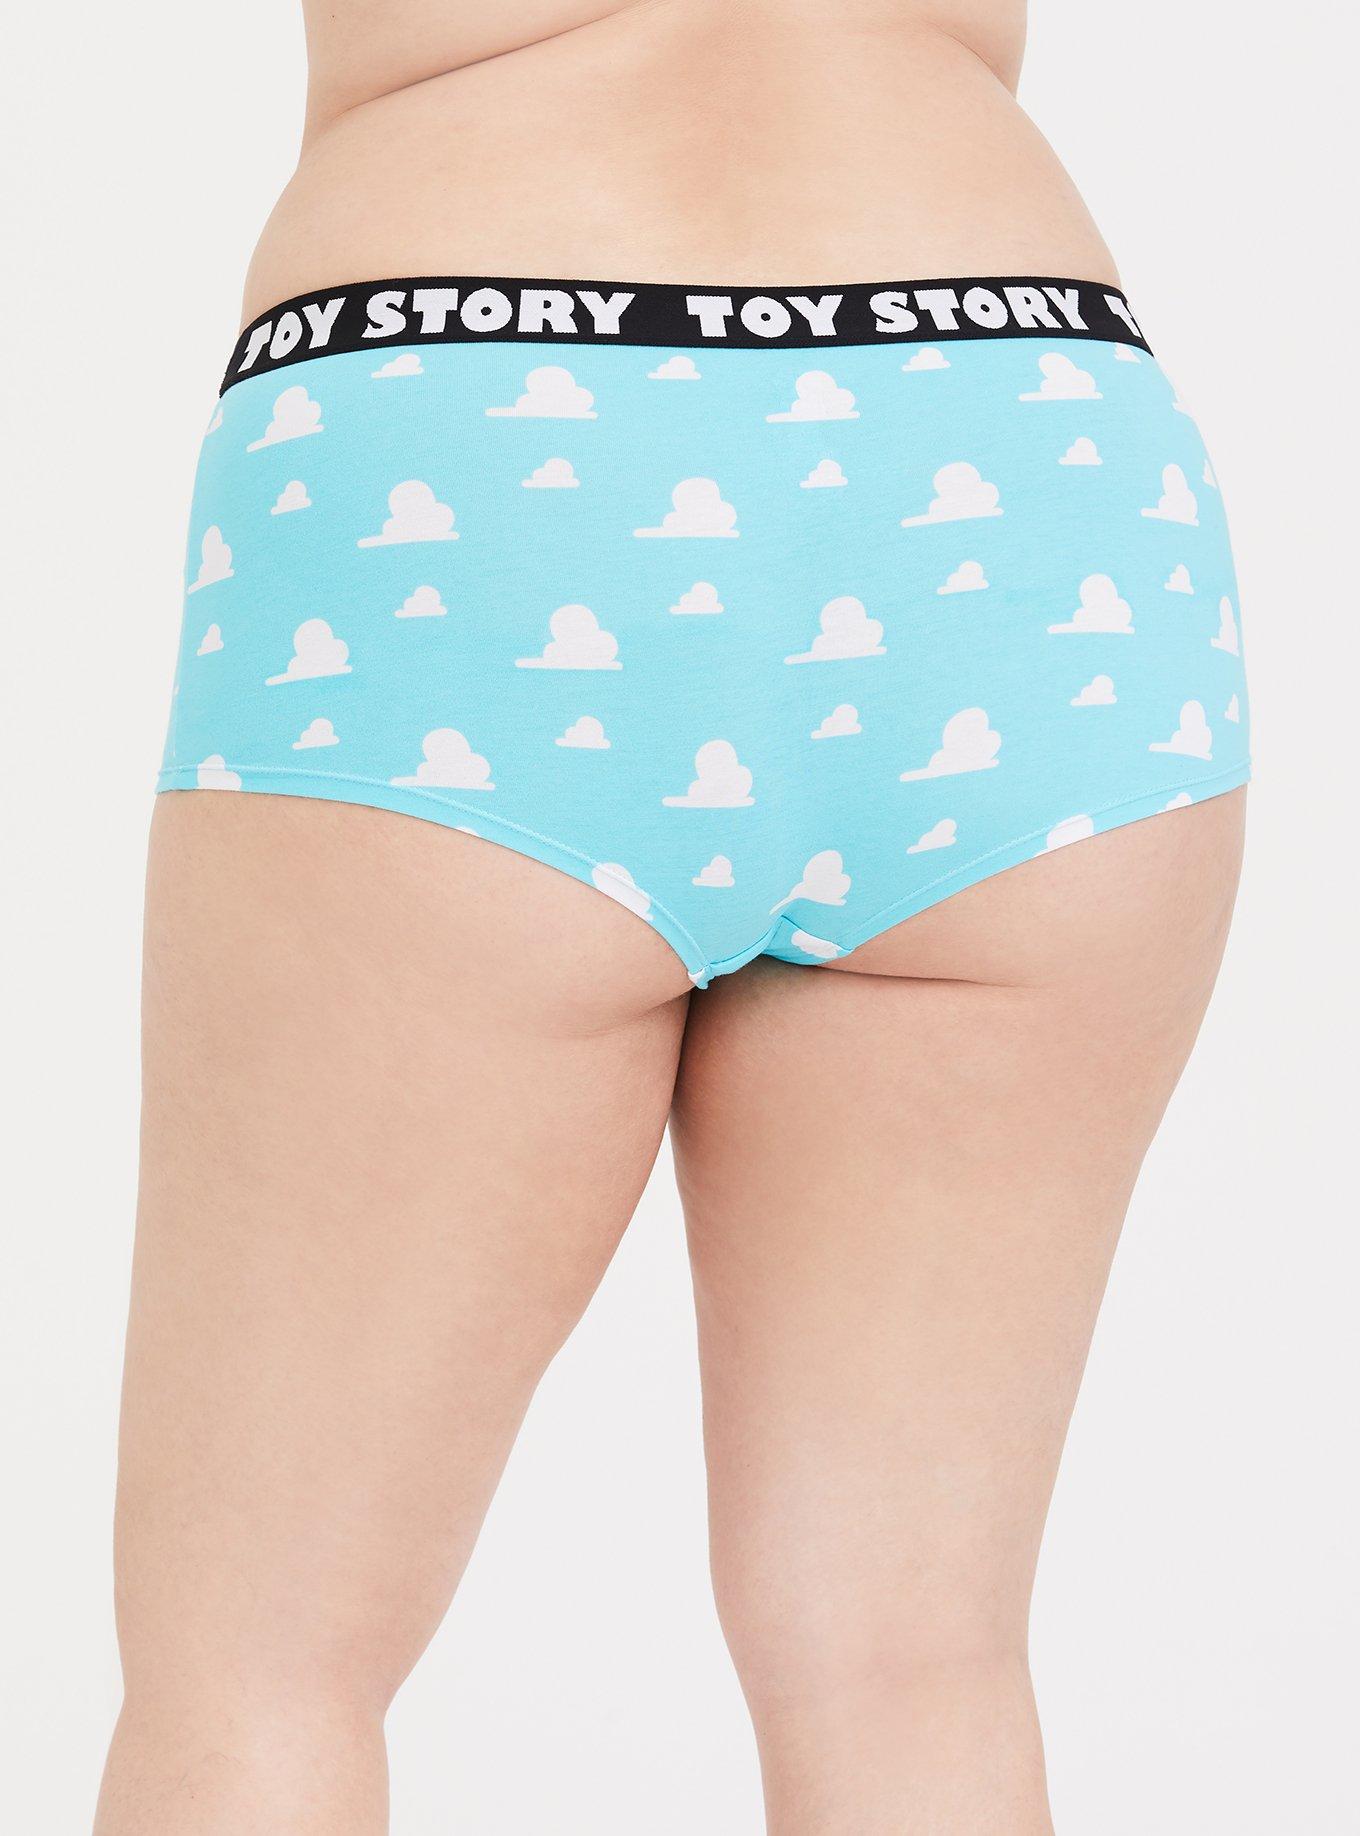 Disney Girls' Big Pixar Toy Story 100% Cotton Panties with Bo Peep